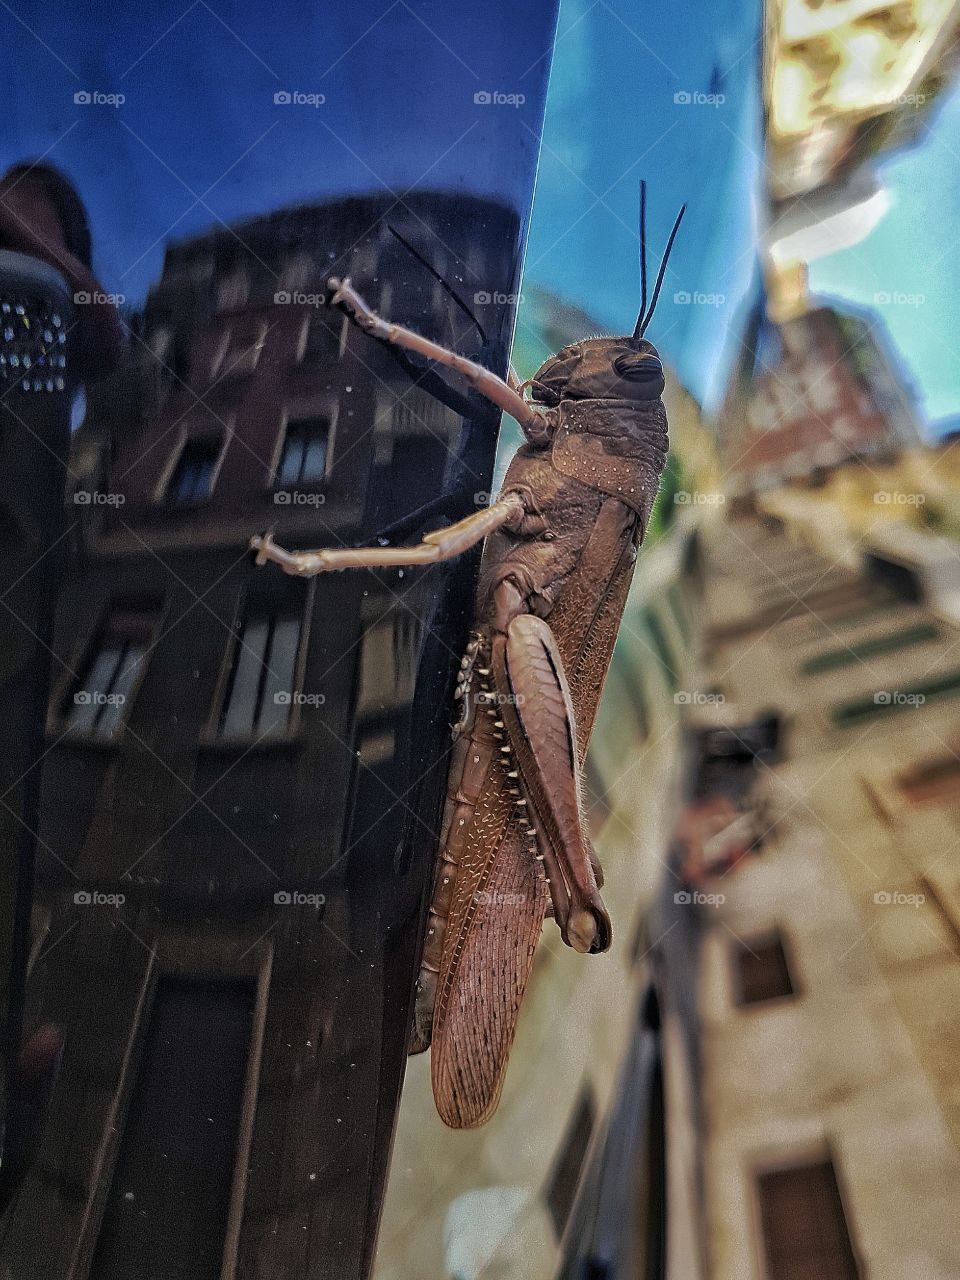 grasshopper in city